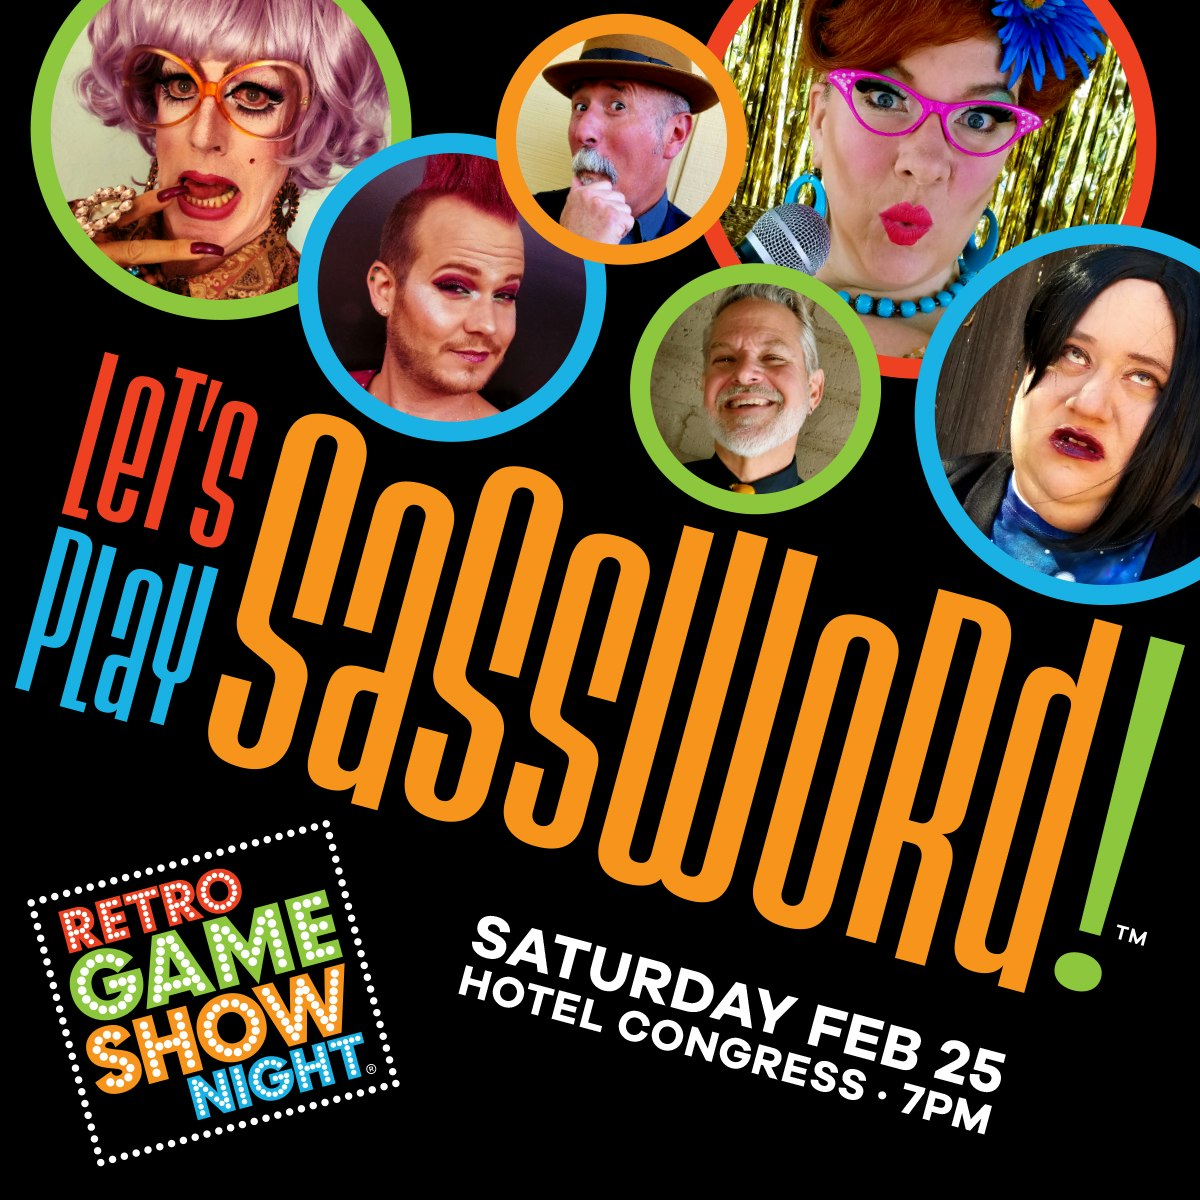 Retro Game Show Night presents Sassword!